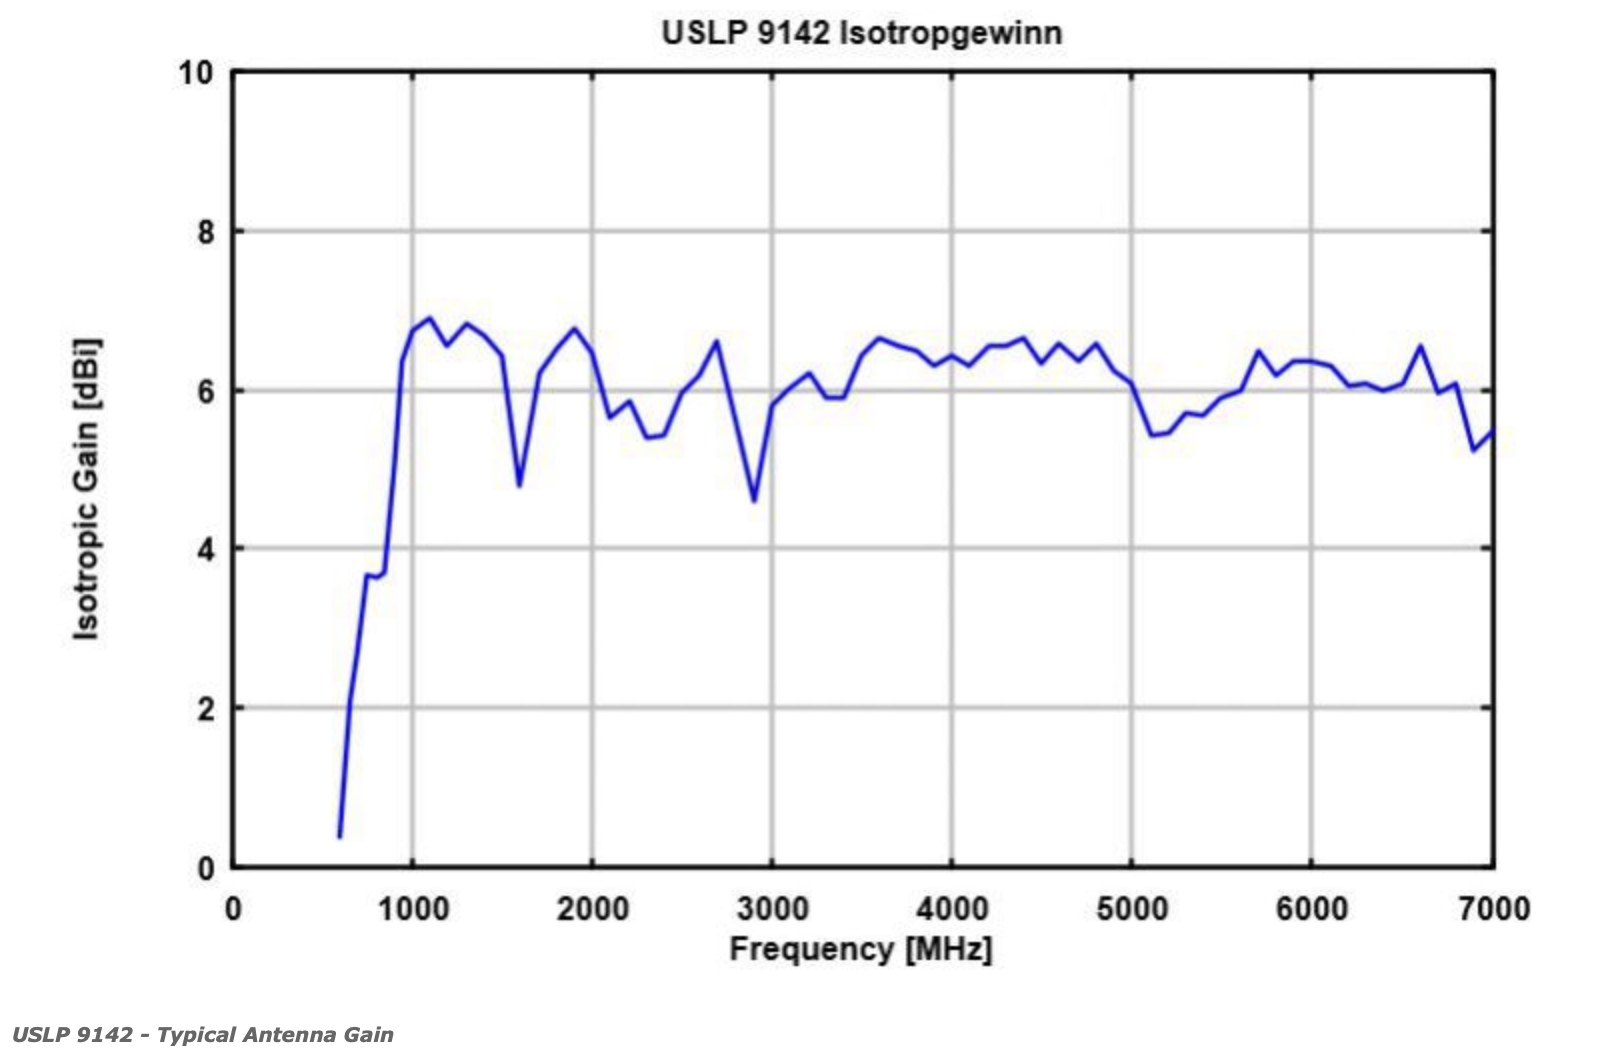 USLP 9142 - typical antenna gain